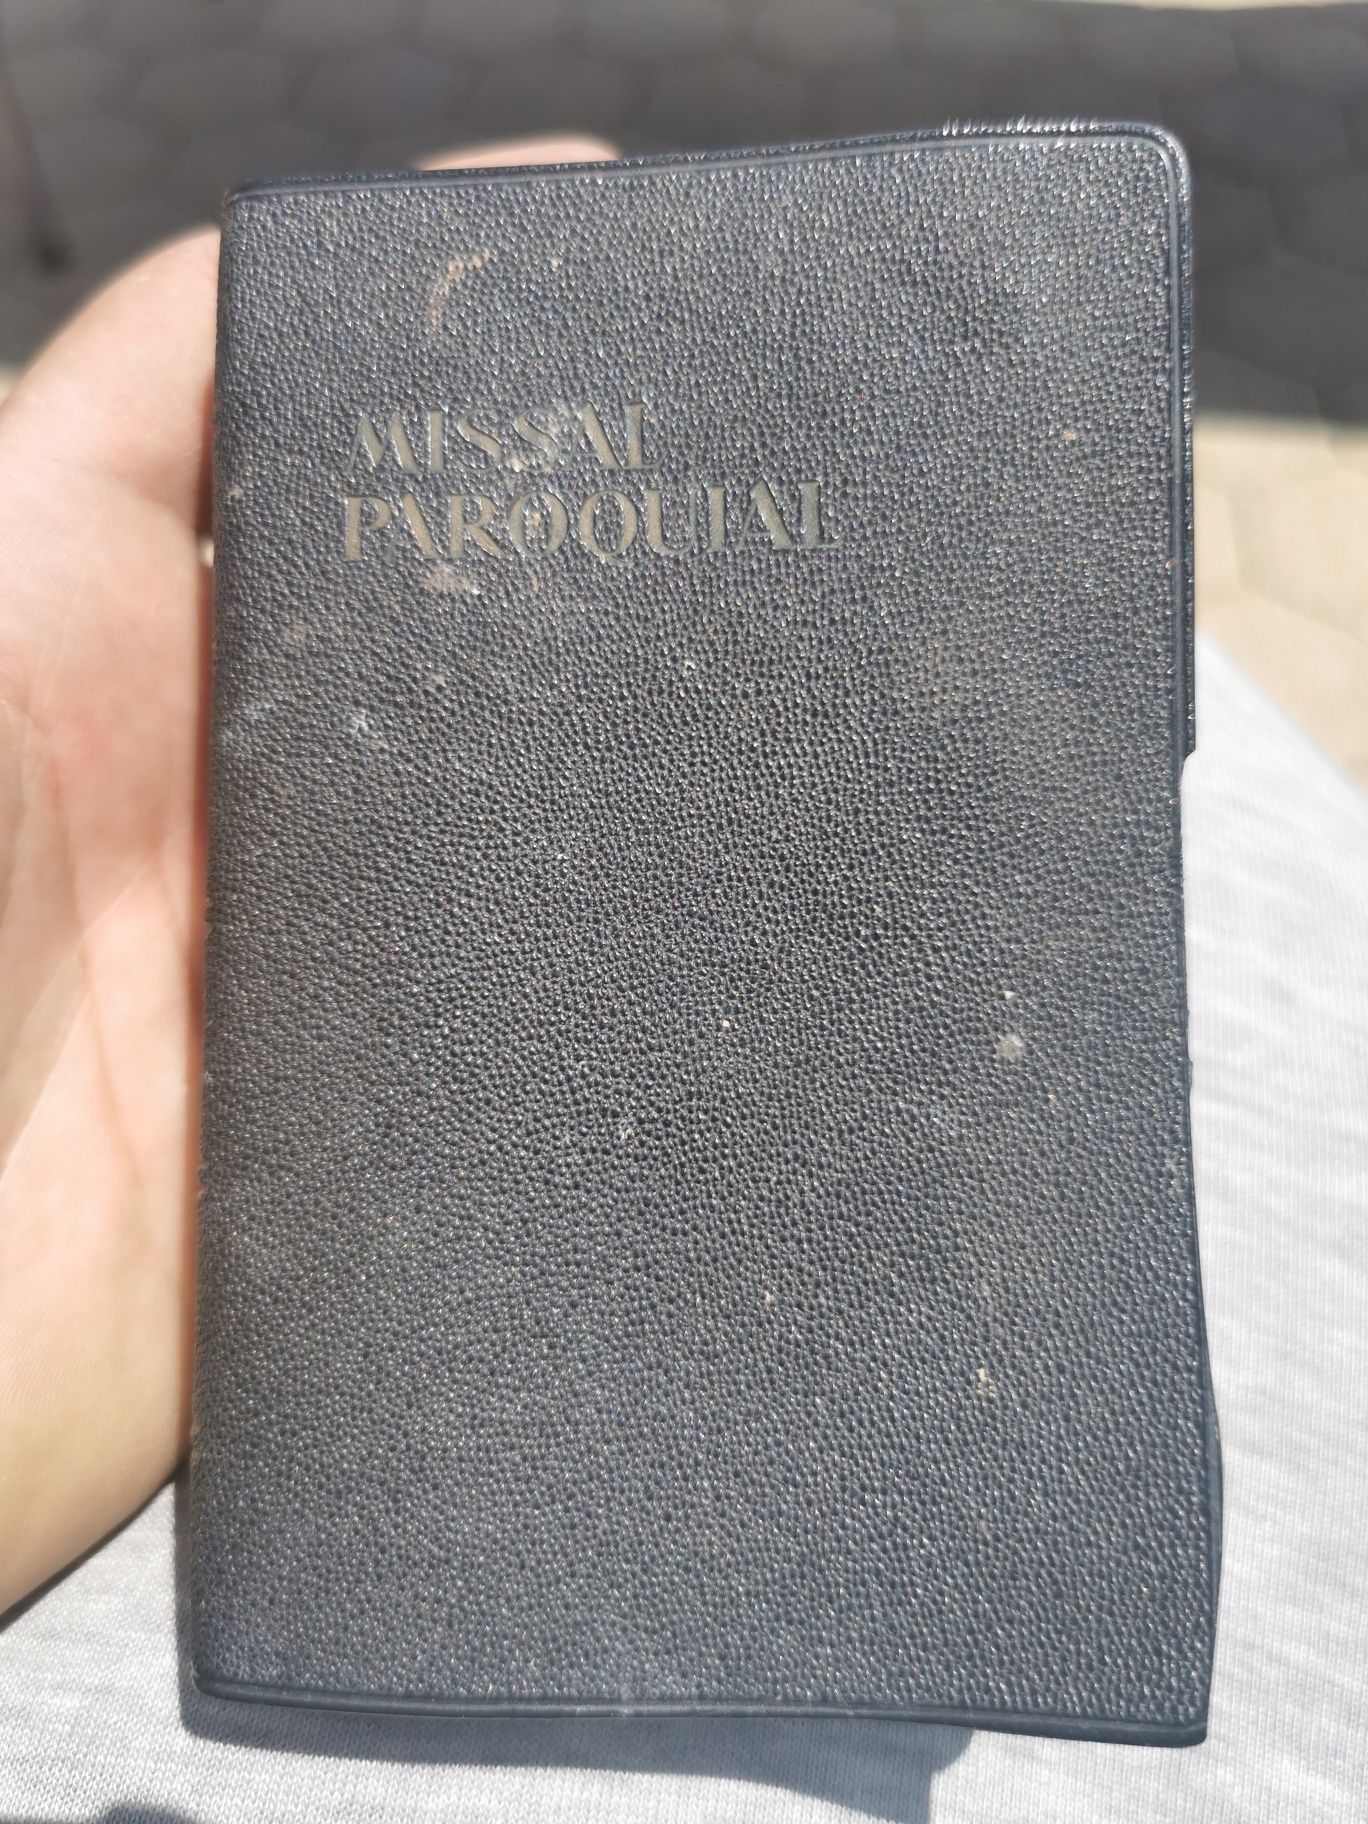 Missal paroquial 1967